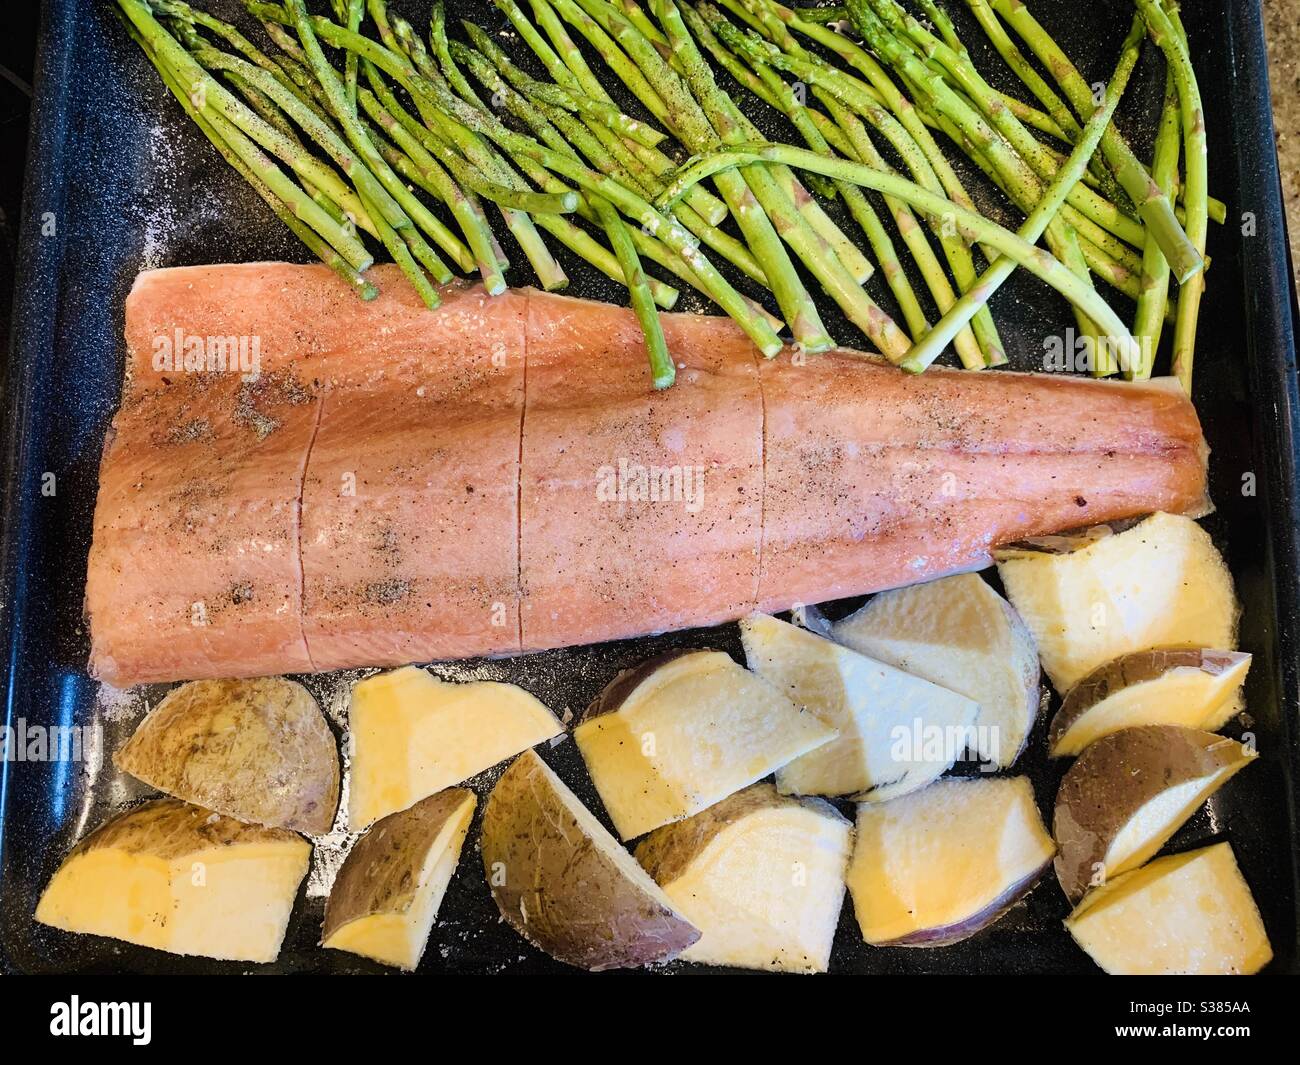 Sana cena al forno: Salmone, asparagi e rutabaga Foto Stock